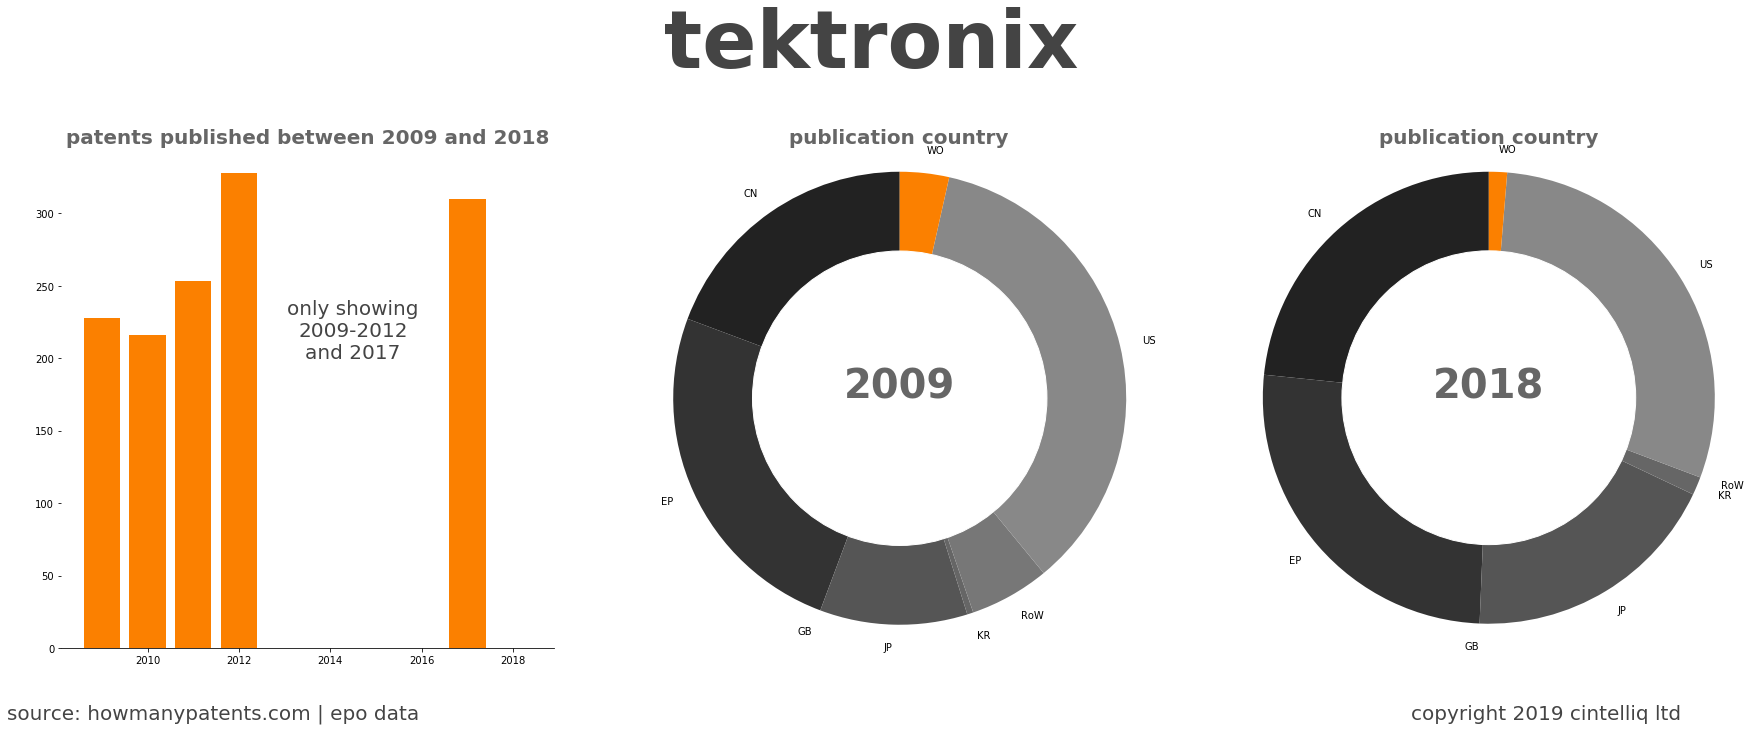 summary of patents for Tektronix